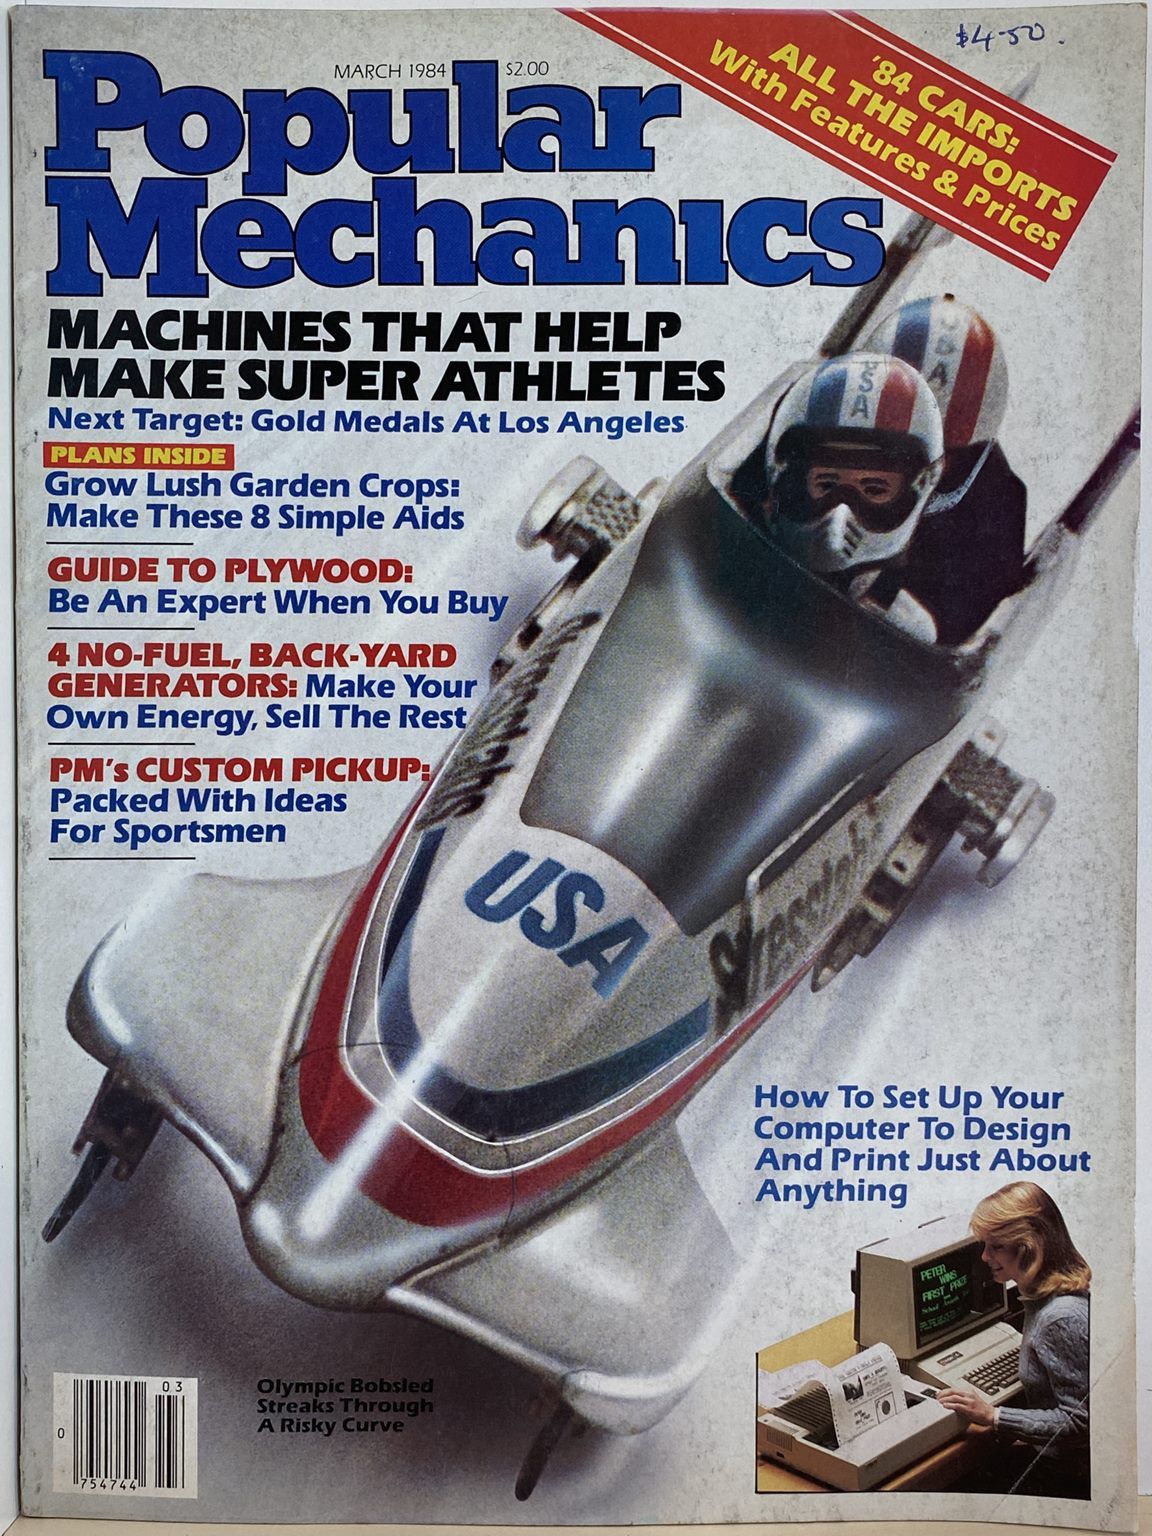 VINTAGE MAGAZINE: Popular Mechanics - Vol. 161, No. 3 - March 1984